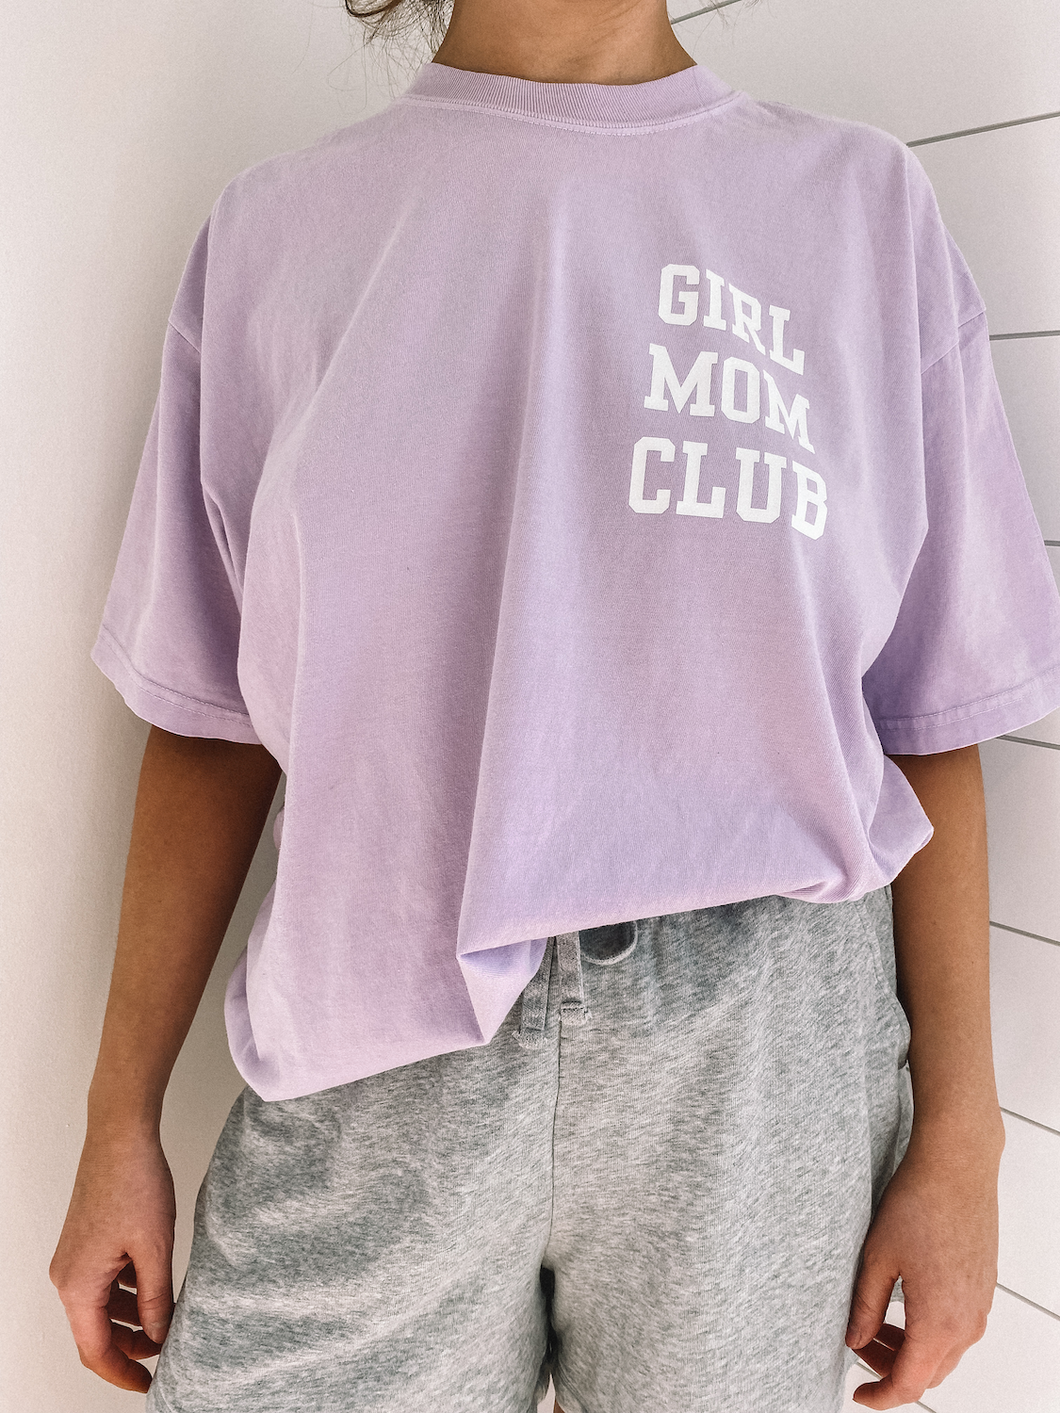 Girl Mom Club Tee